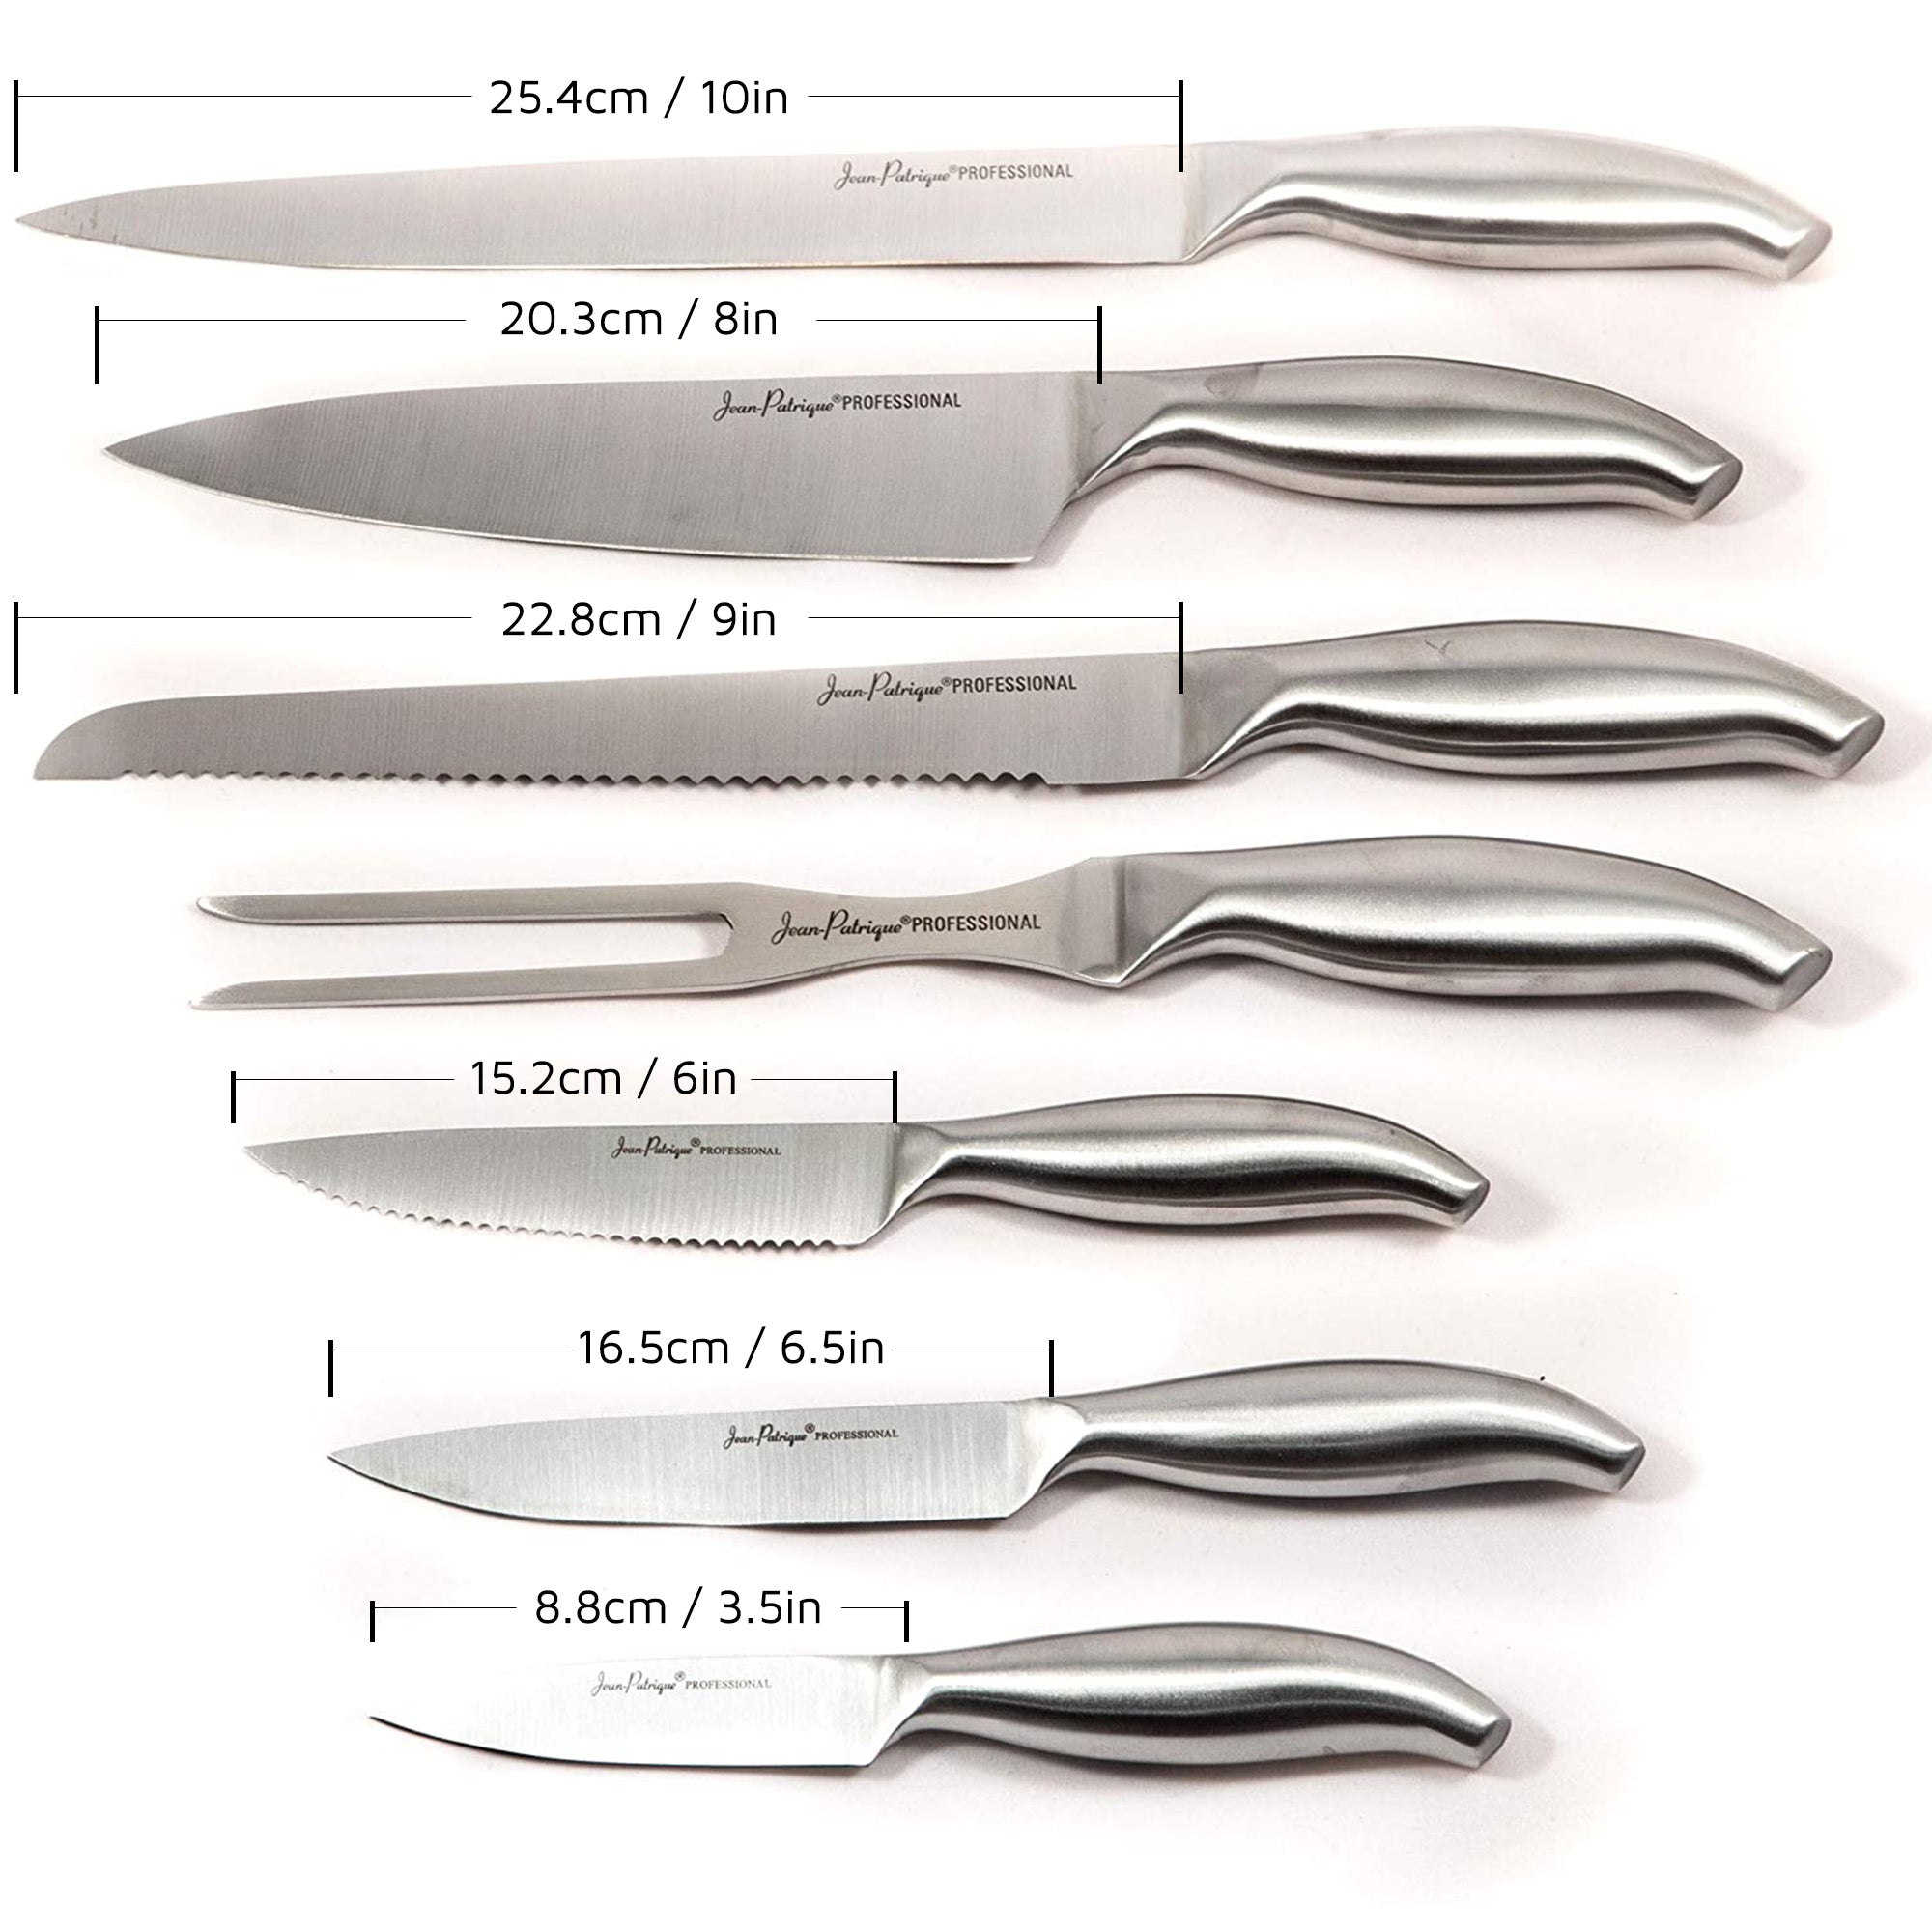 The Whole Family Knife Set